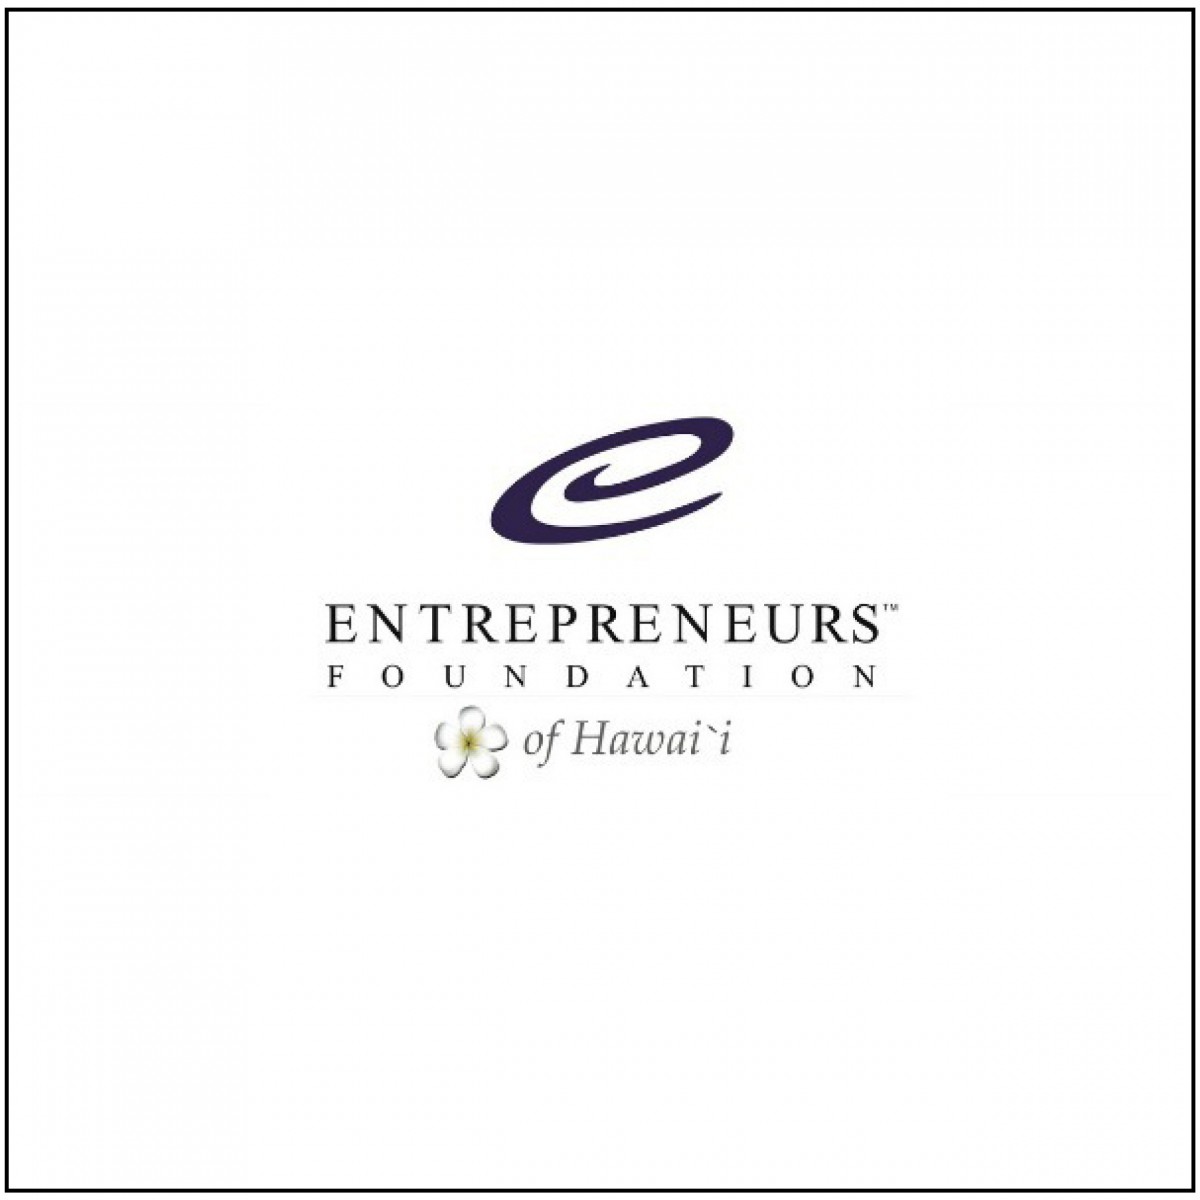 Entrepreneurs Foundation of Hawaii